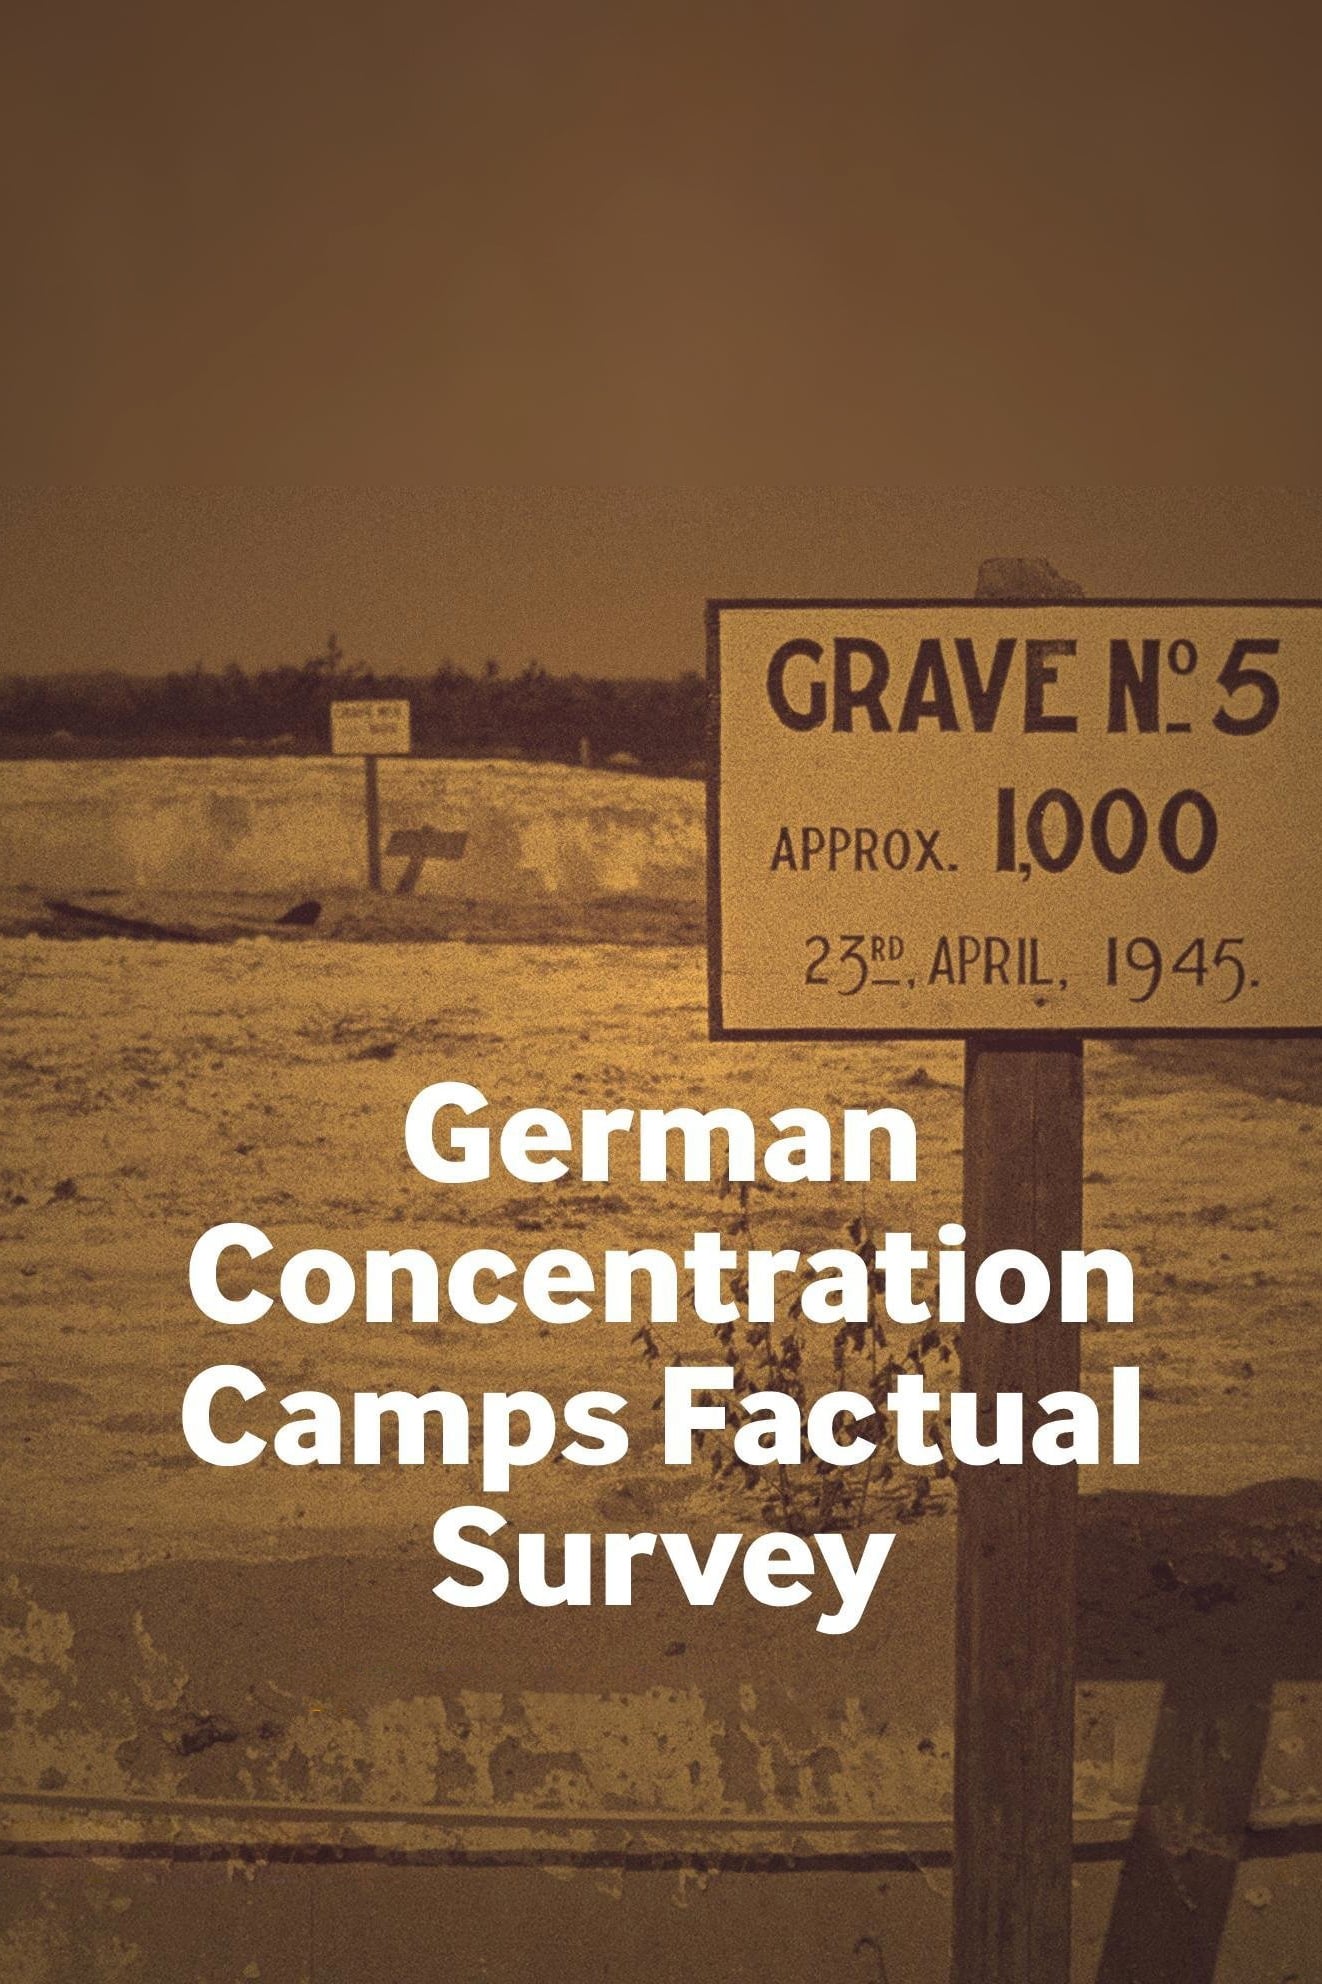 Caratula de German Concentration Camps Factual Survey (German Concentration Camps Factual Survey) 